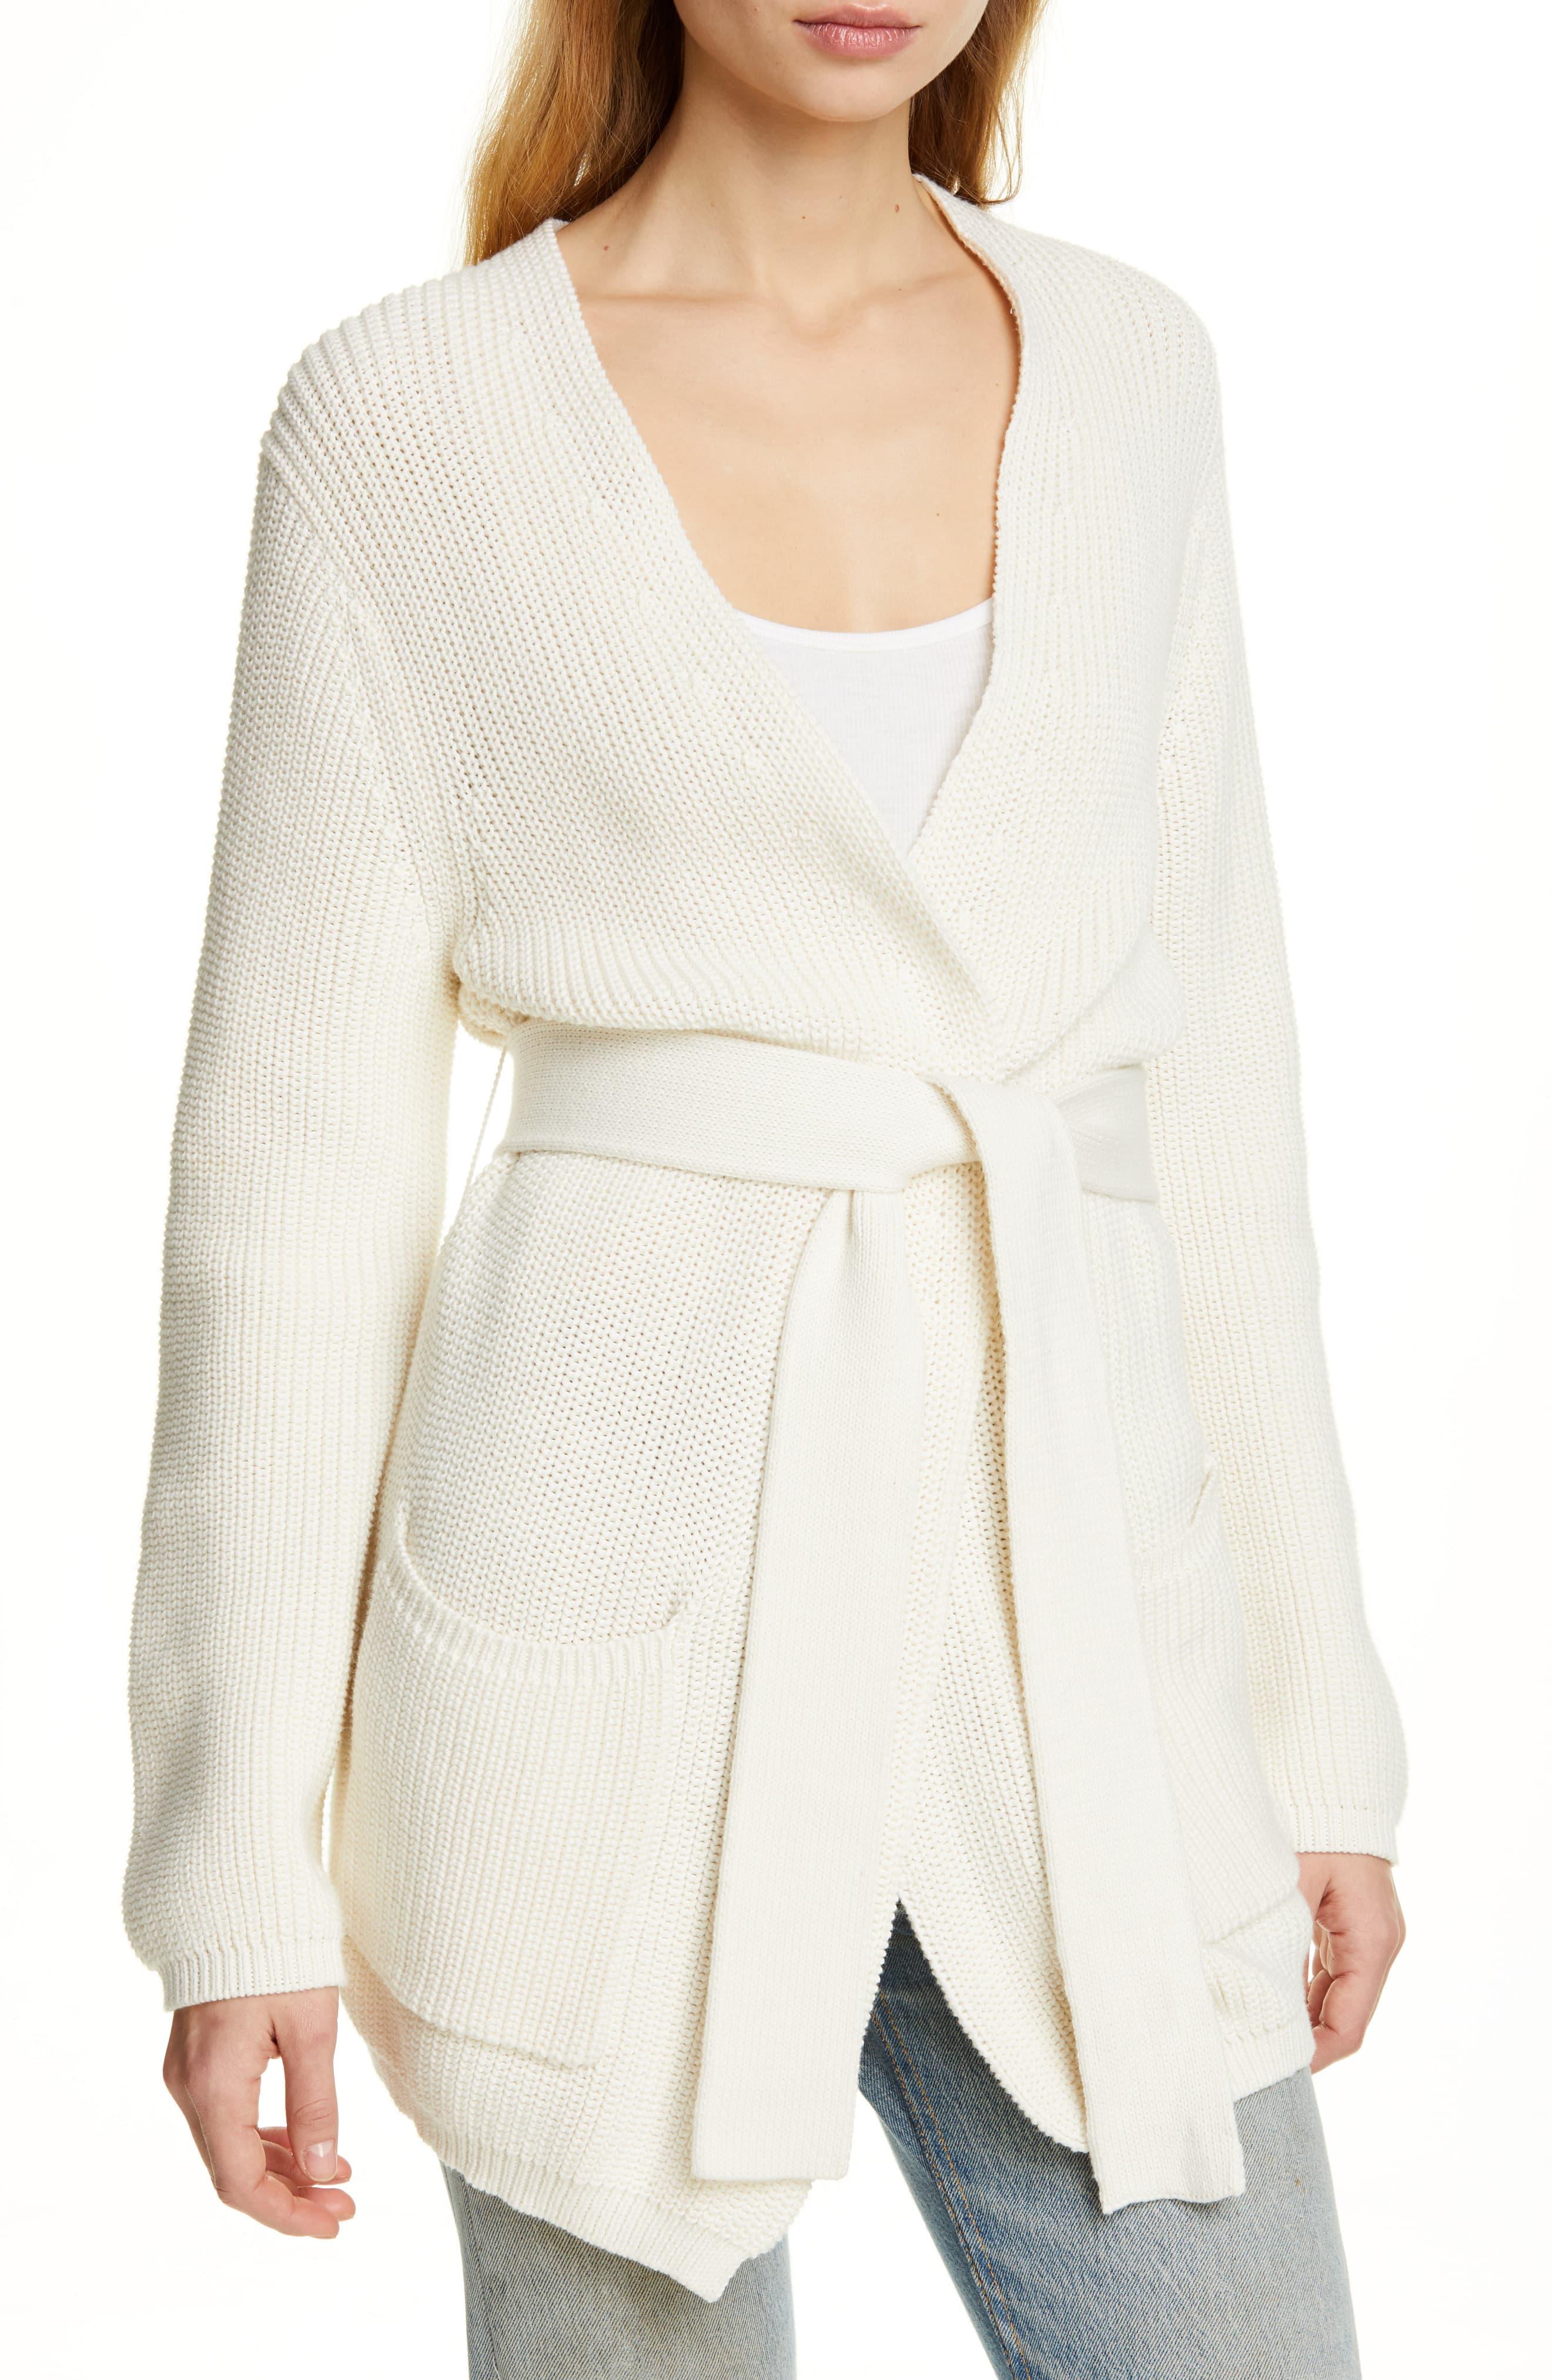 Jenni Kayne Belted Wrap Cotton Cardigan in Ivory (White) - Lyst